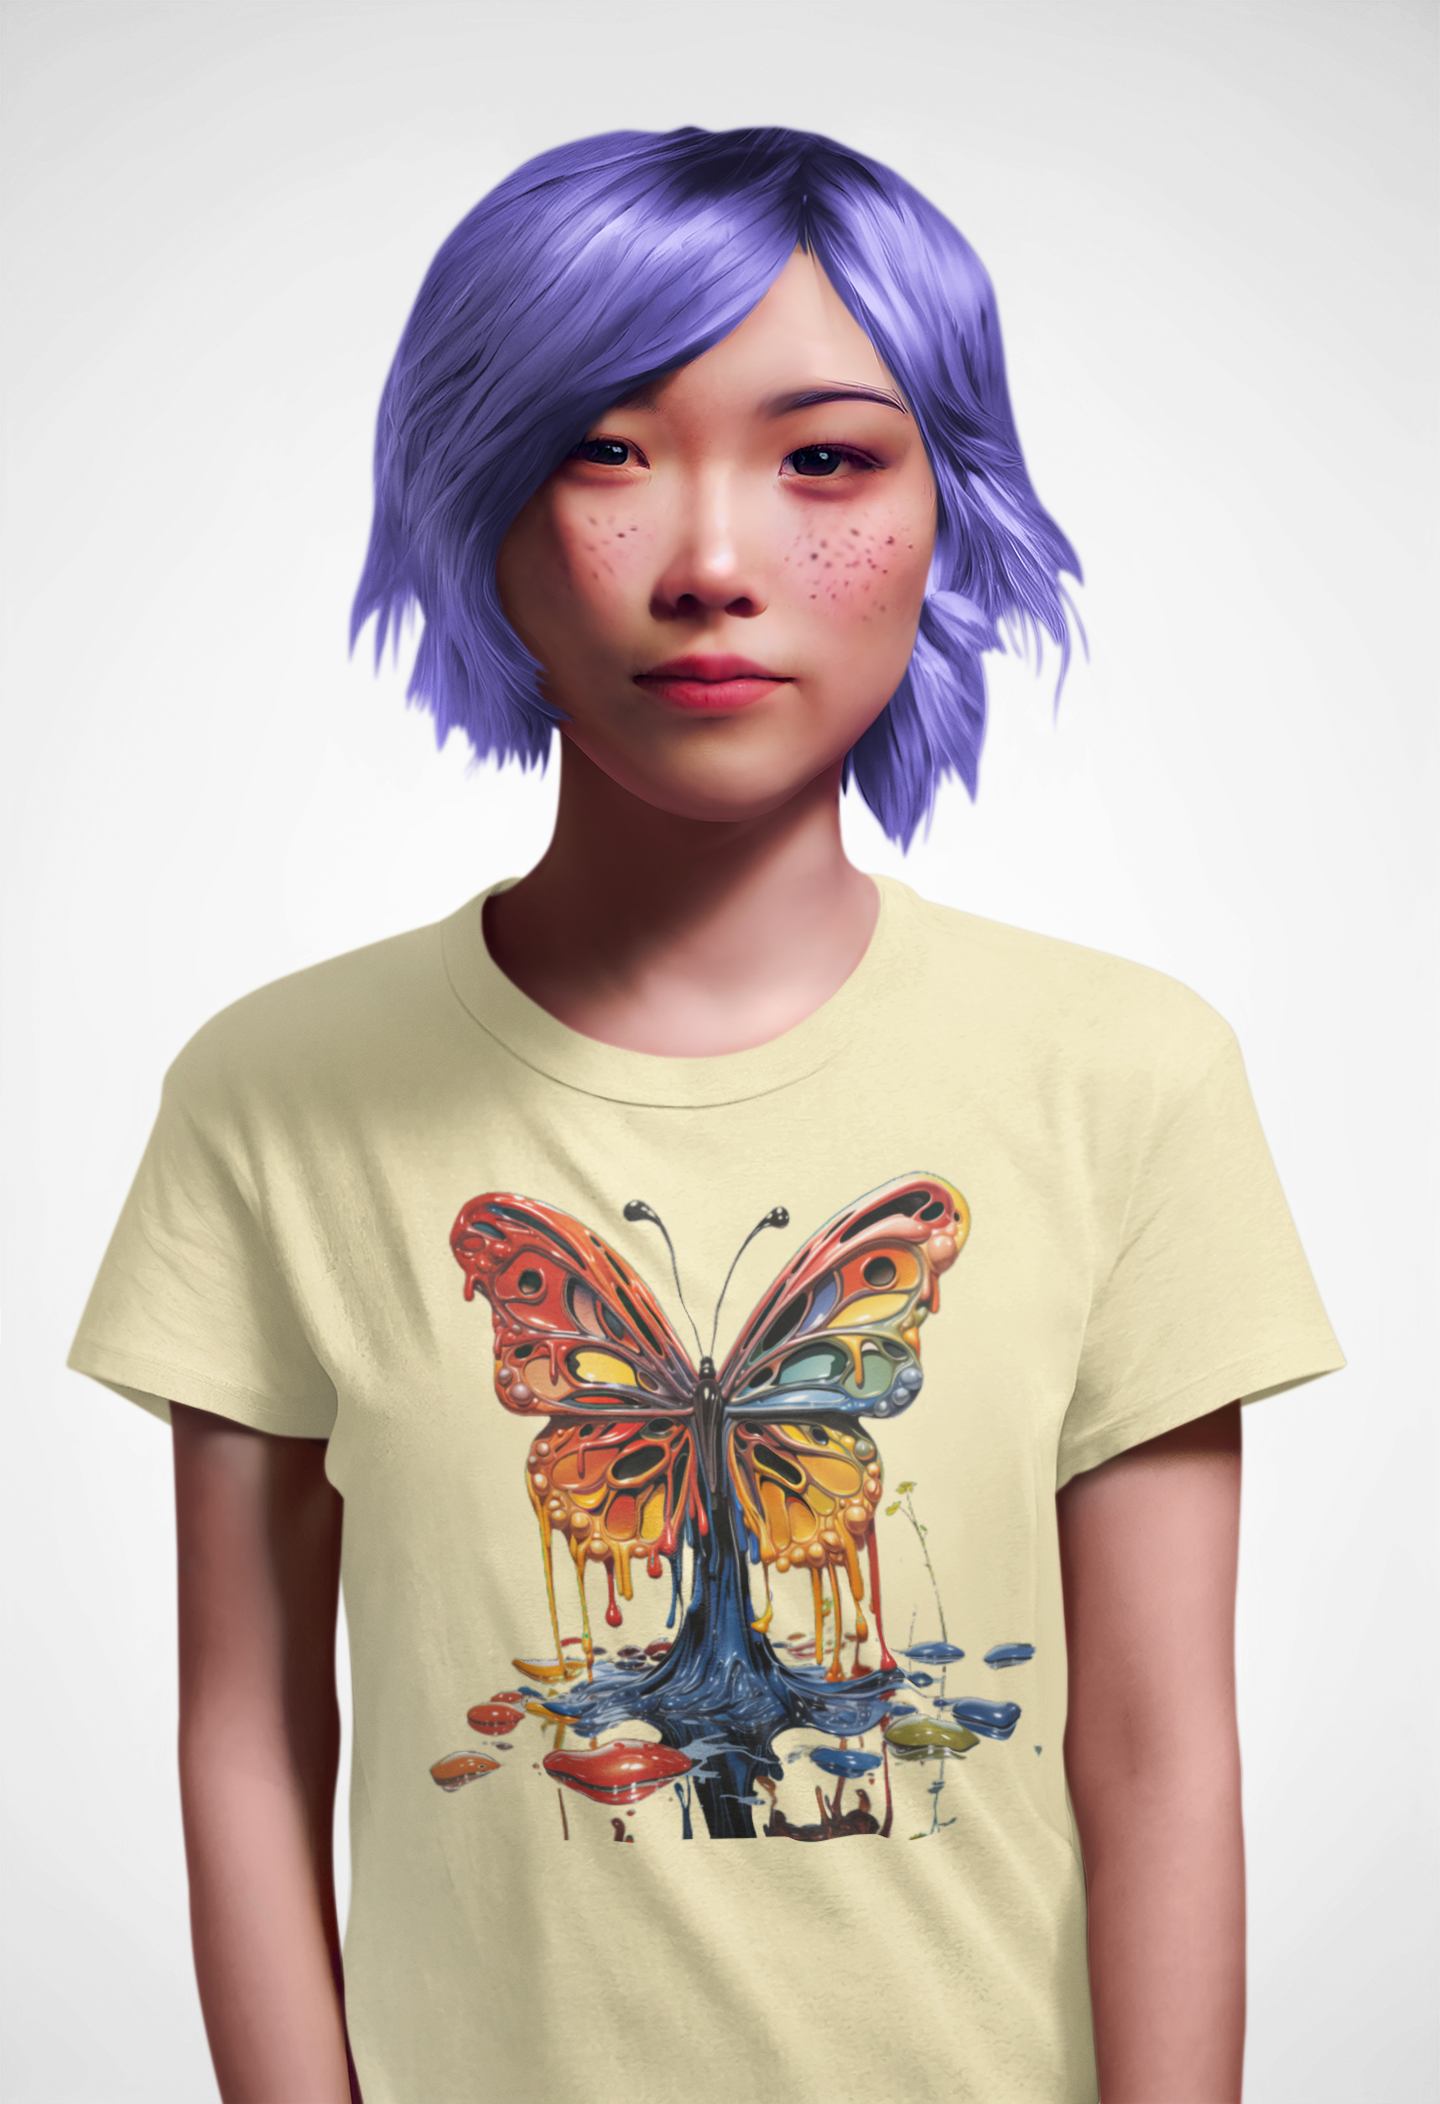 Women's Favorite T-Shirt Pop Surrealism Butterfly Design 008